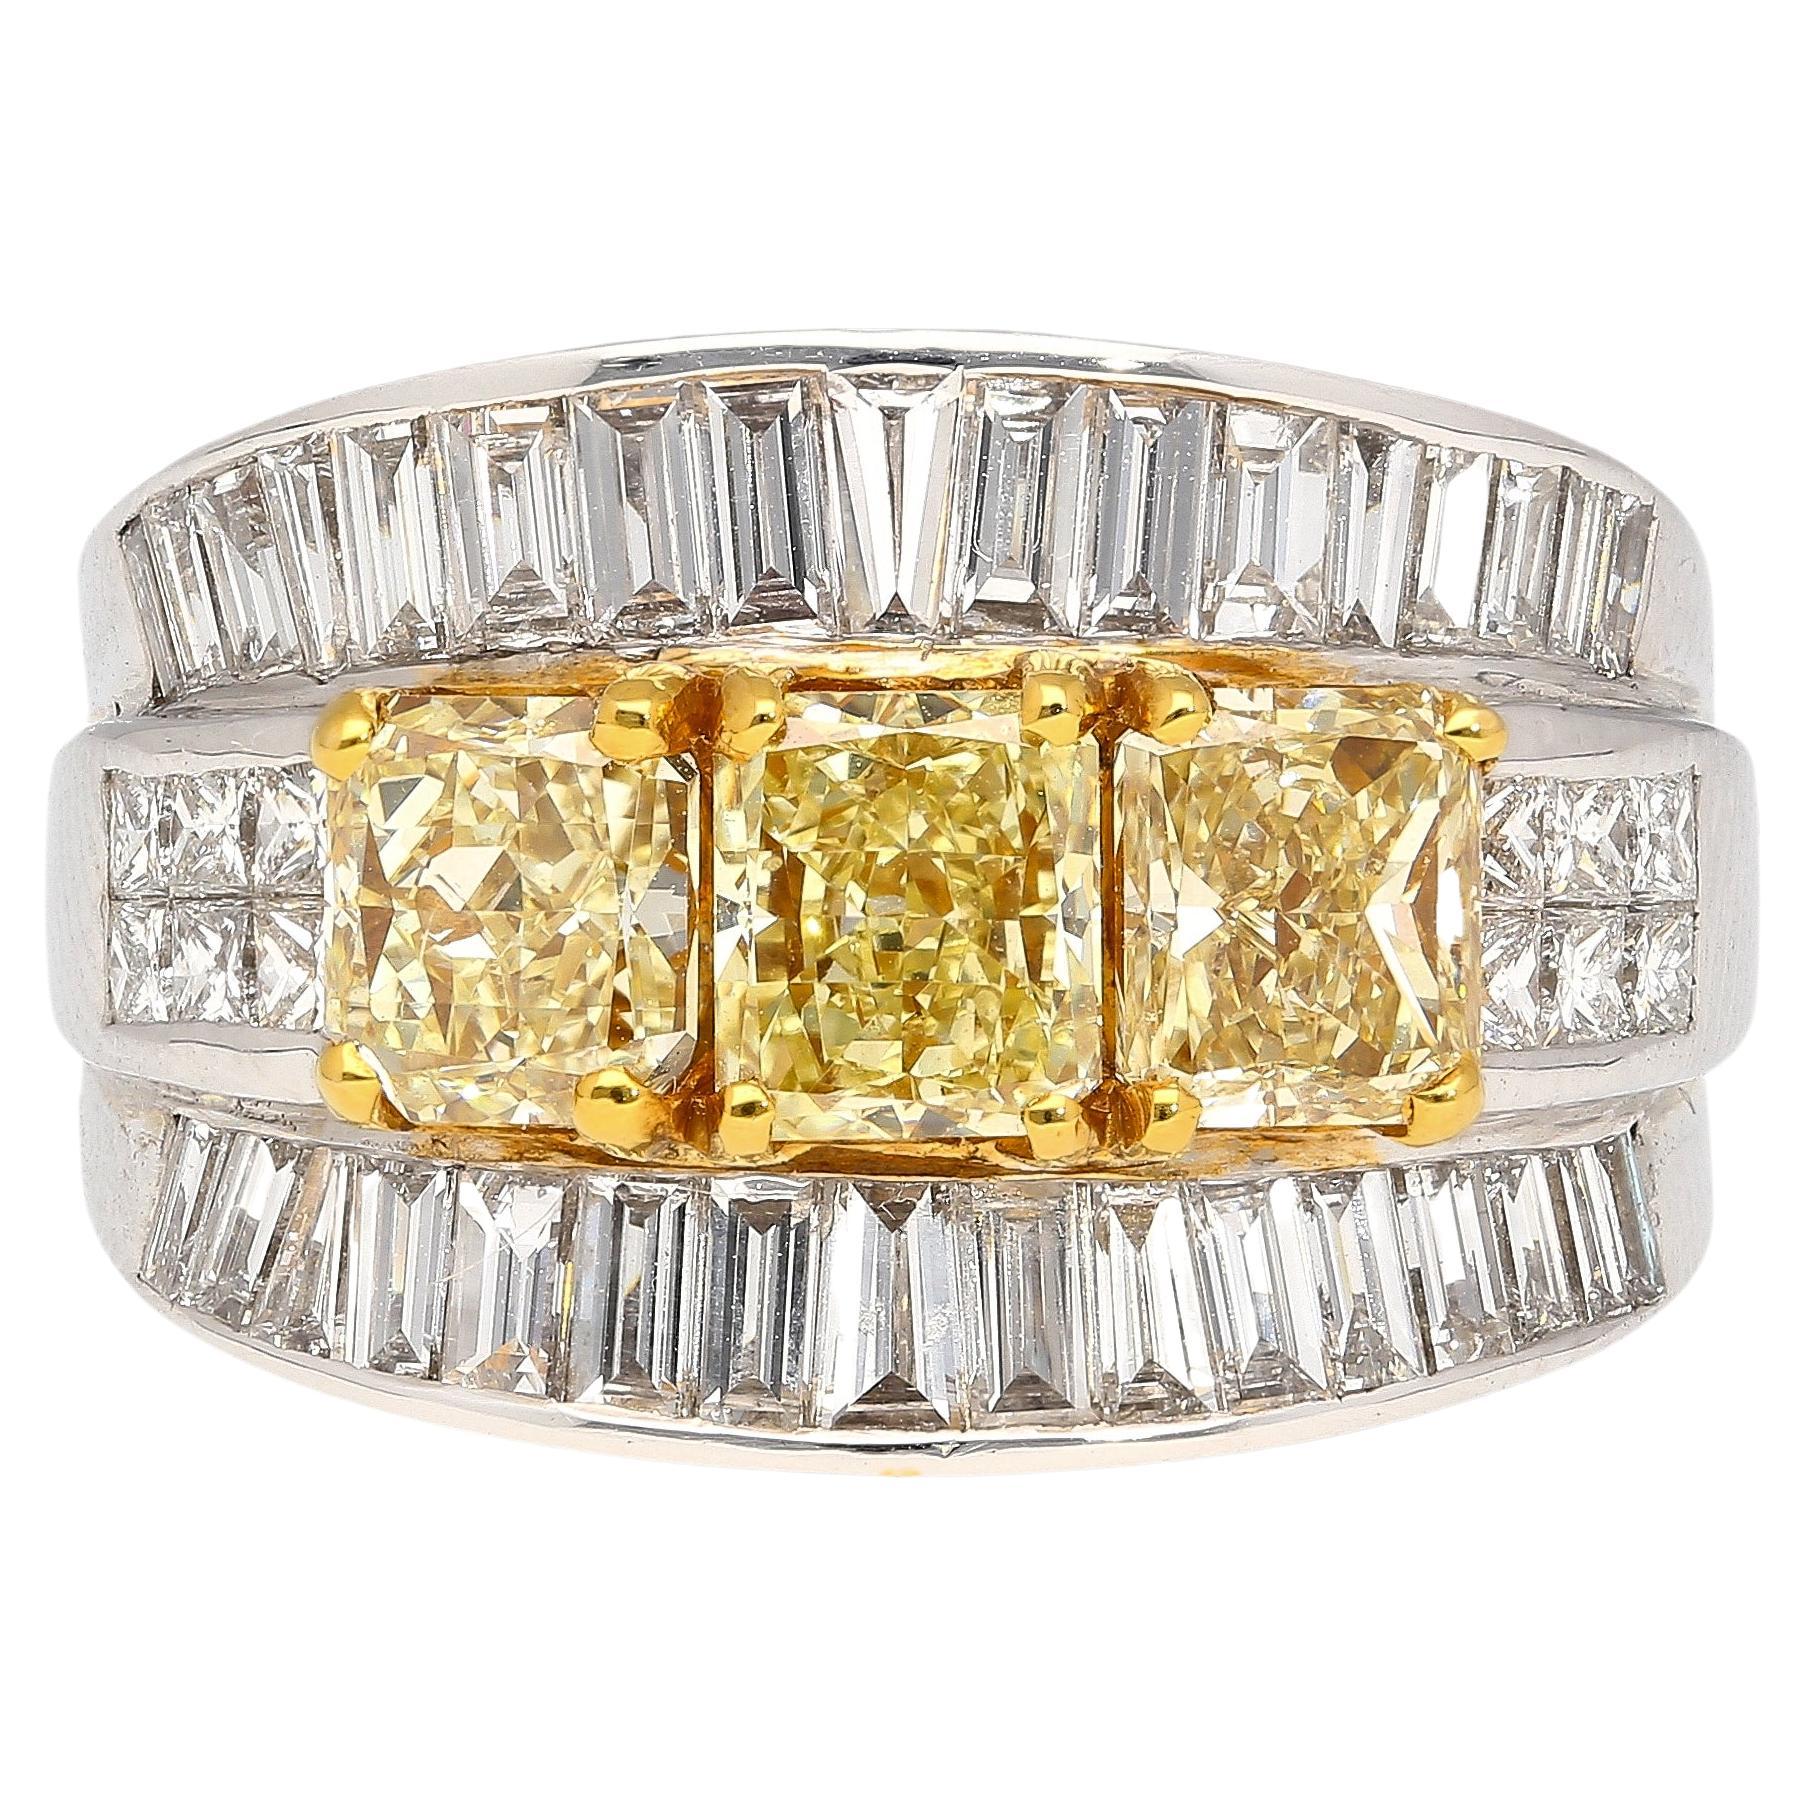 3.28 Carat Radiant Cut Fancy Yellow Diamond 3-Stone Ring in 18k White Gold